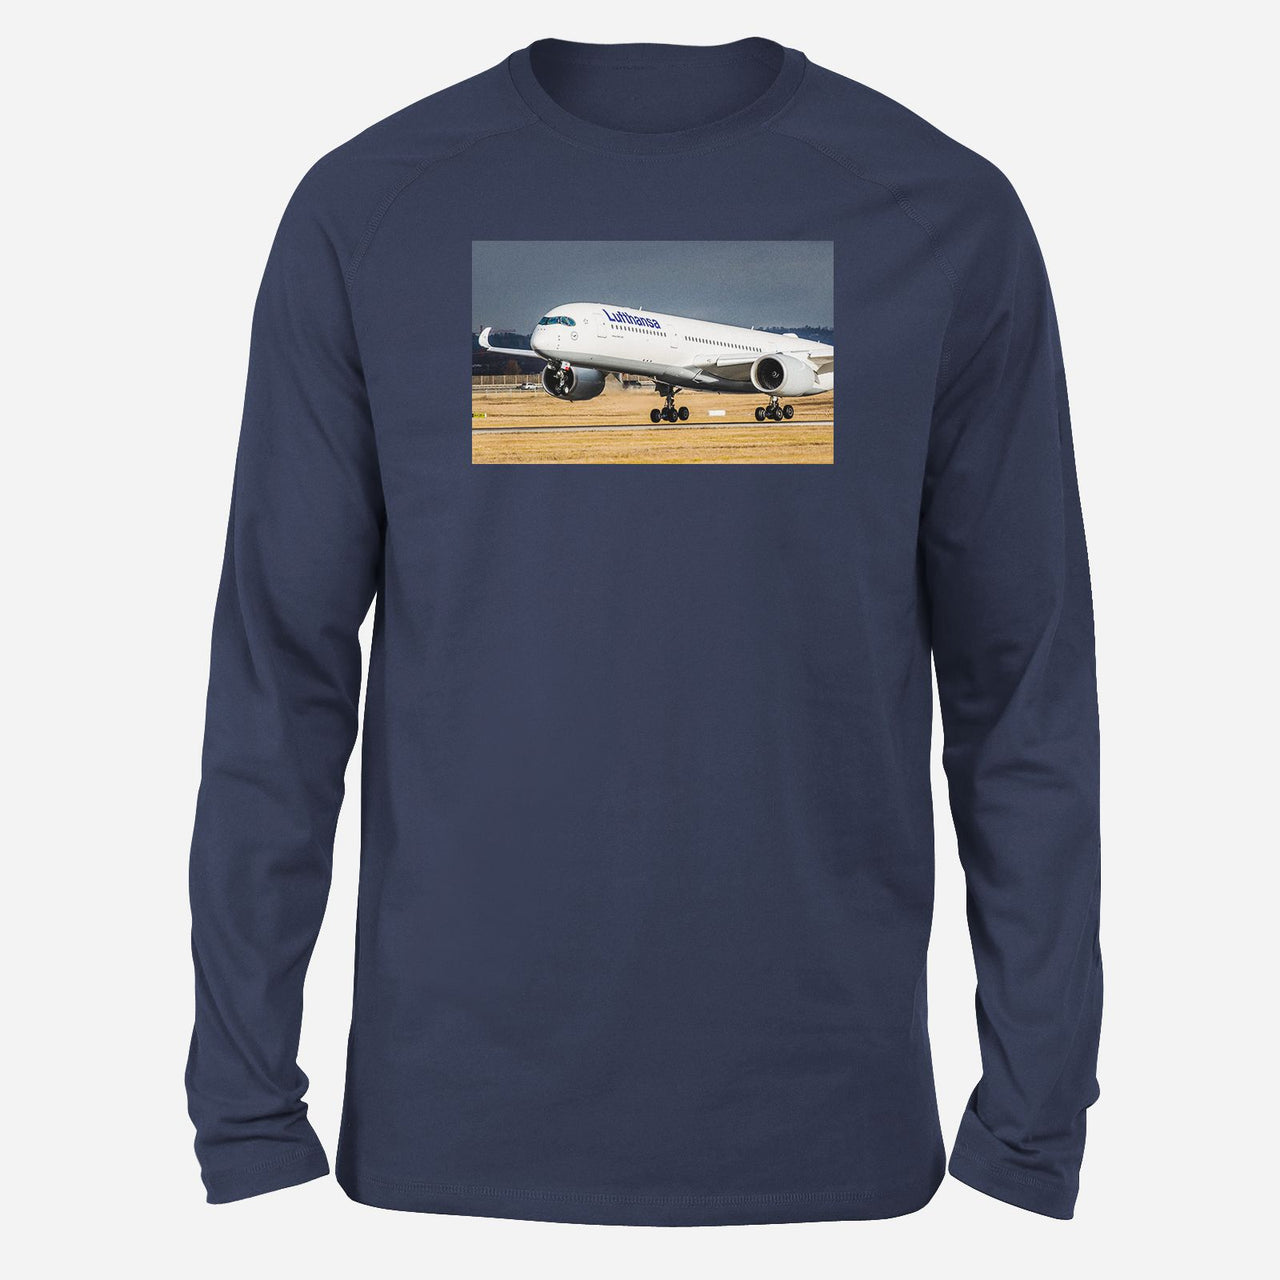 Lutfhansa A350 Designed Long-Sleeve T-Shirts